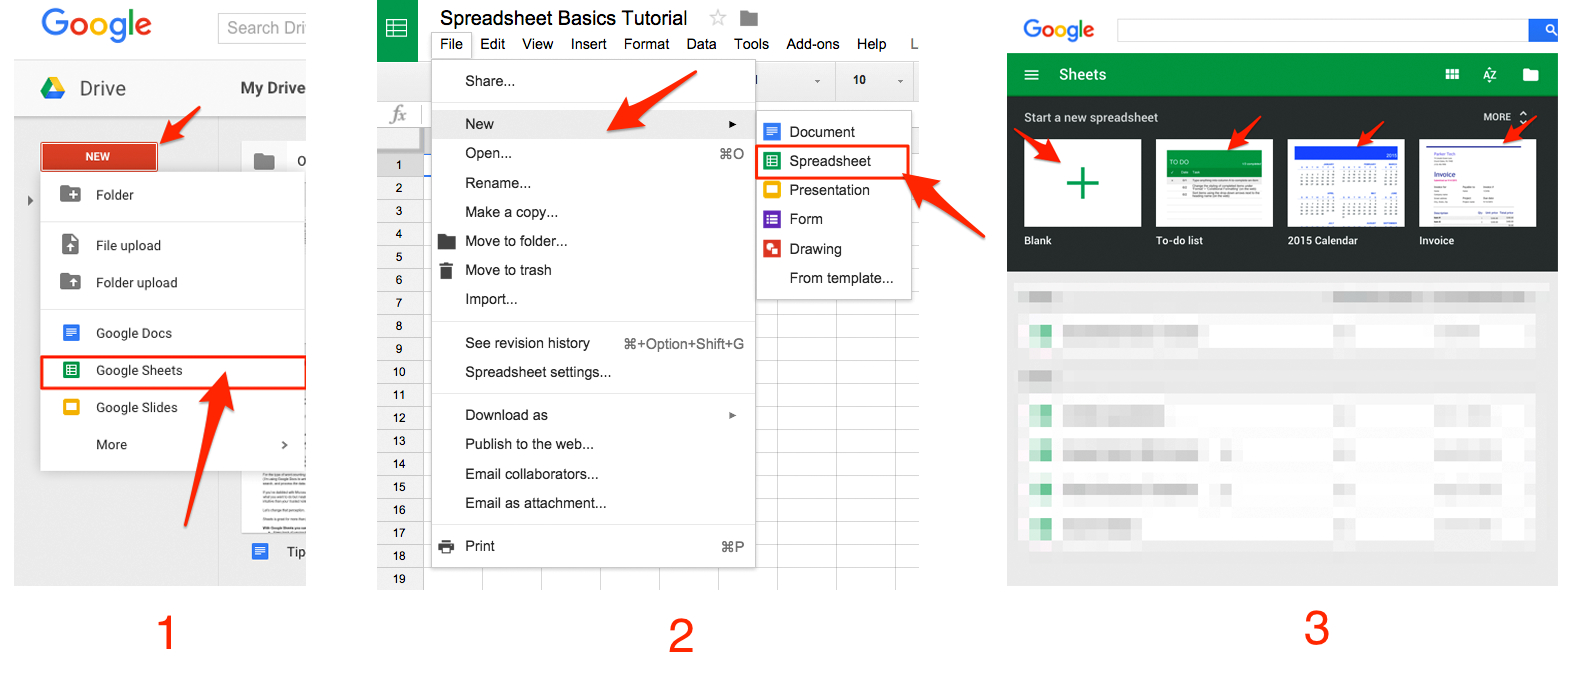 Spreadsheet Help Guide Inside Google Sheets 101: The Beginner's Guide To Online Spreadsheets  The